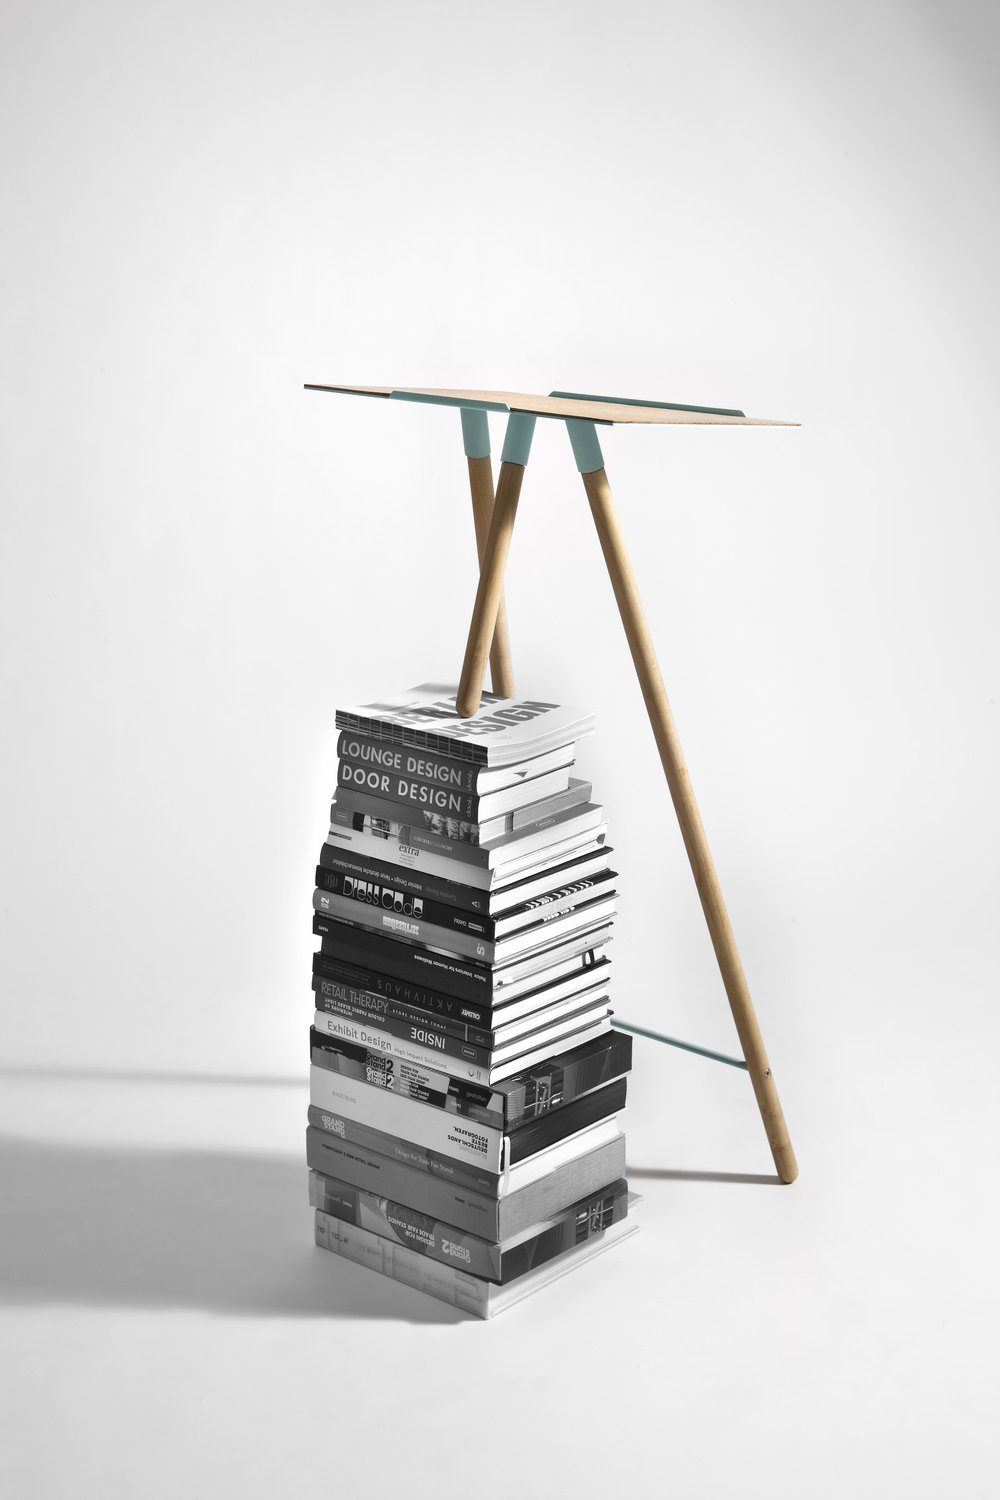 11_thread-family-higher-desk_furniture-design_coordination-berlin.jpg